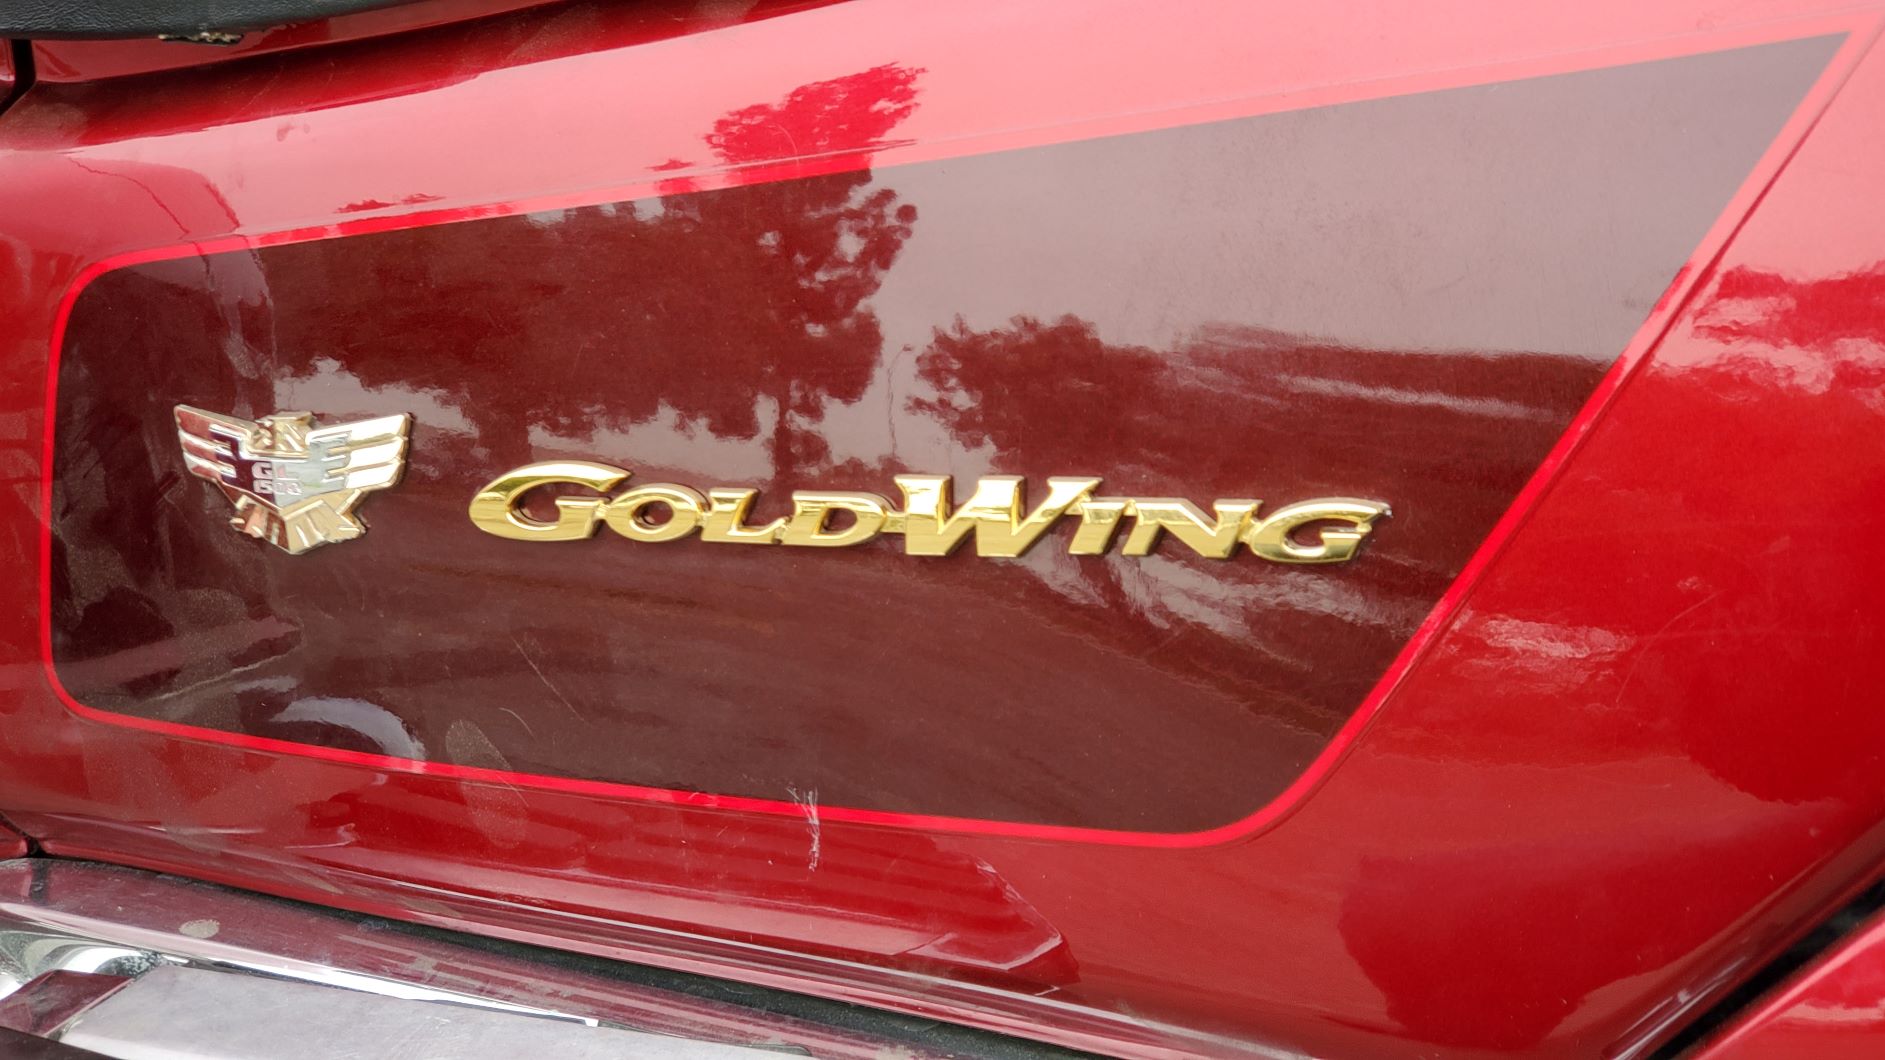 Honda Goldwing 1500 se, albesadv, honda motorcycle, albe's adv, goldwing